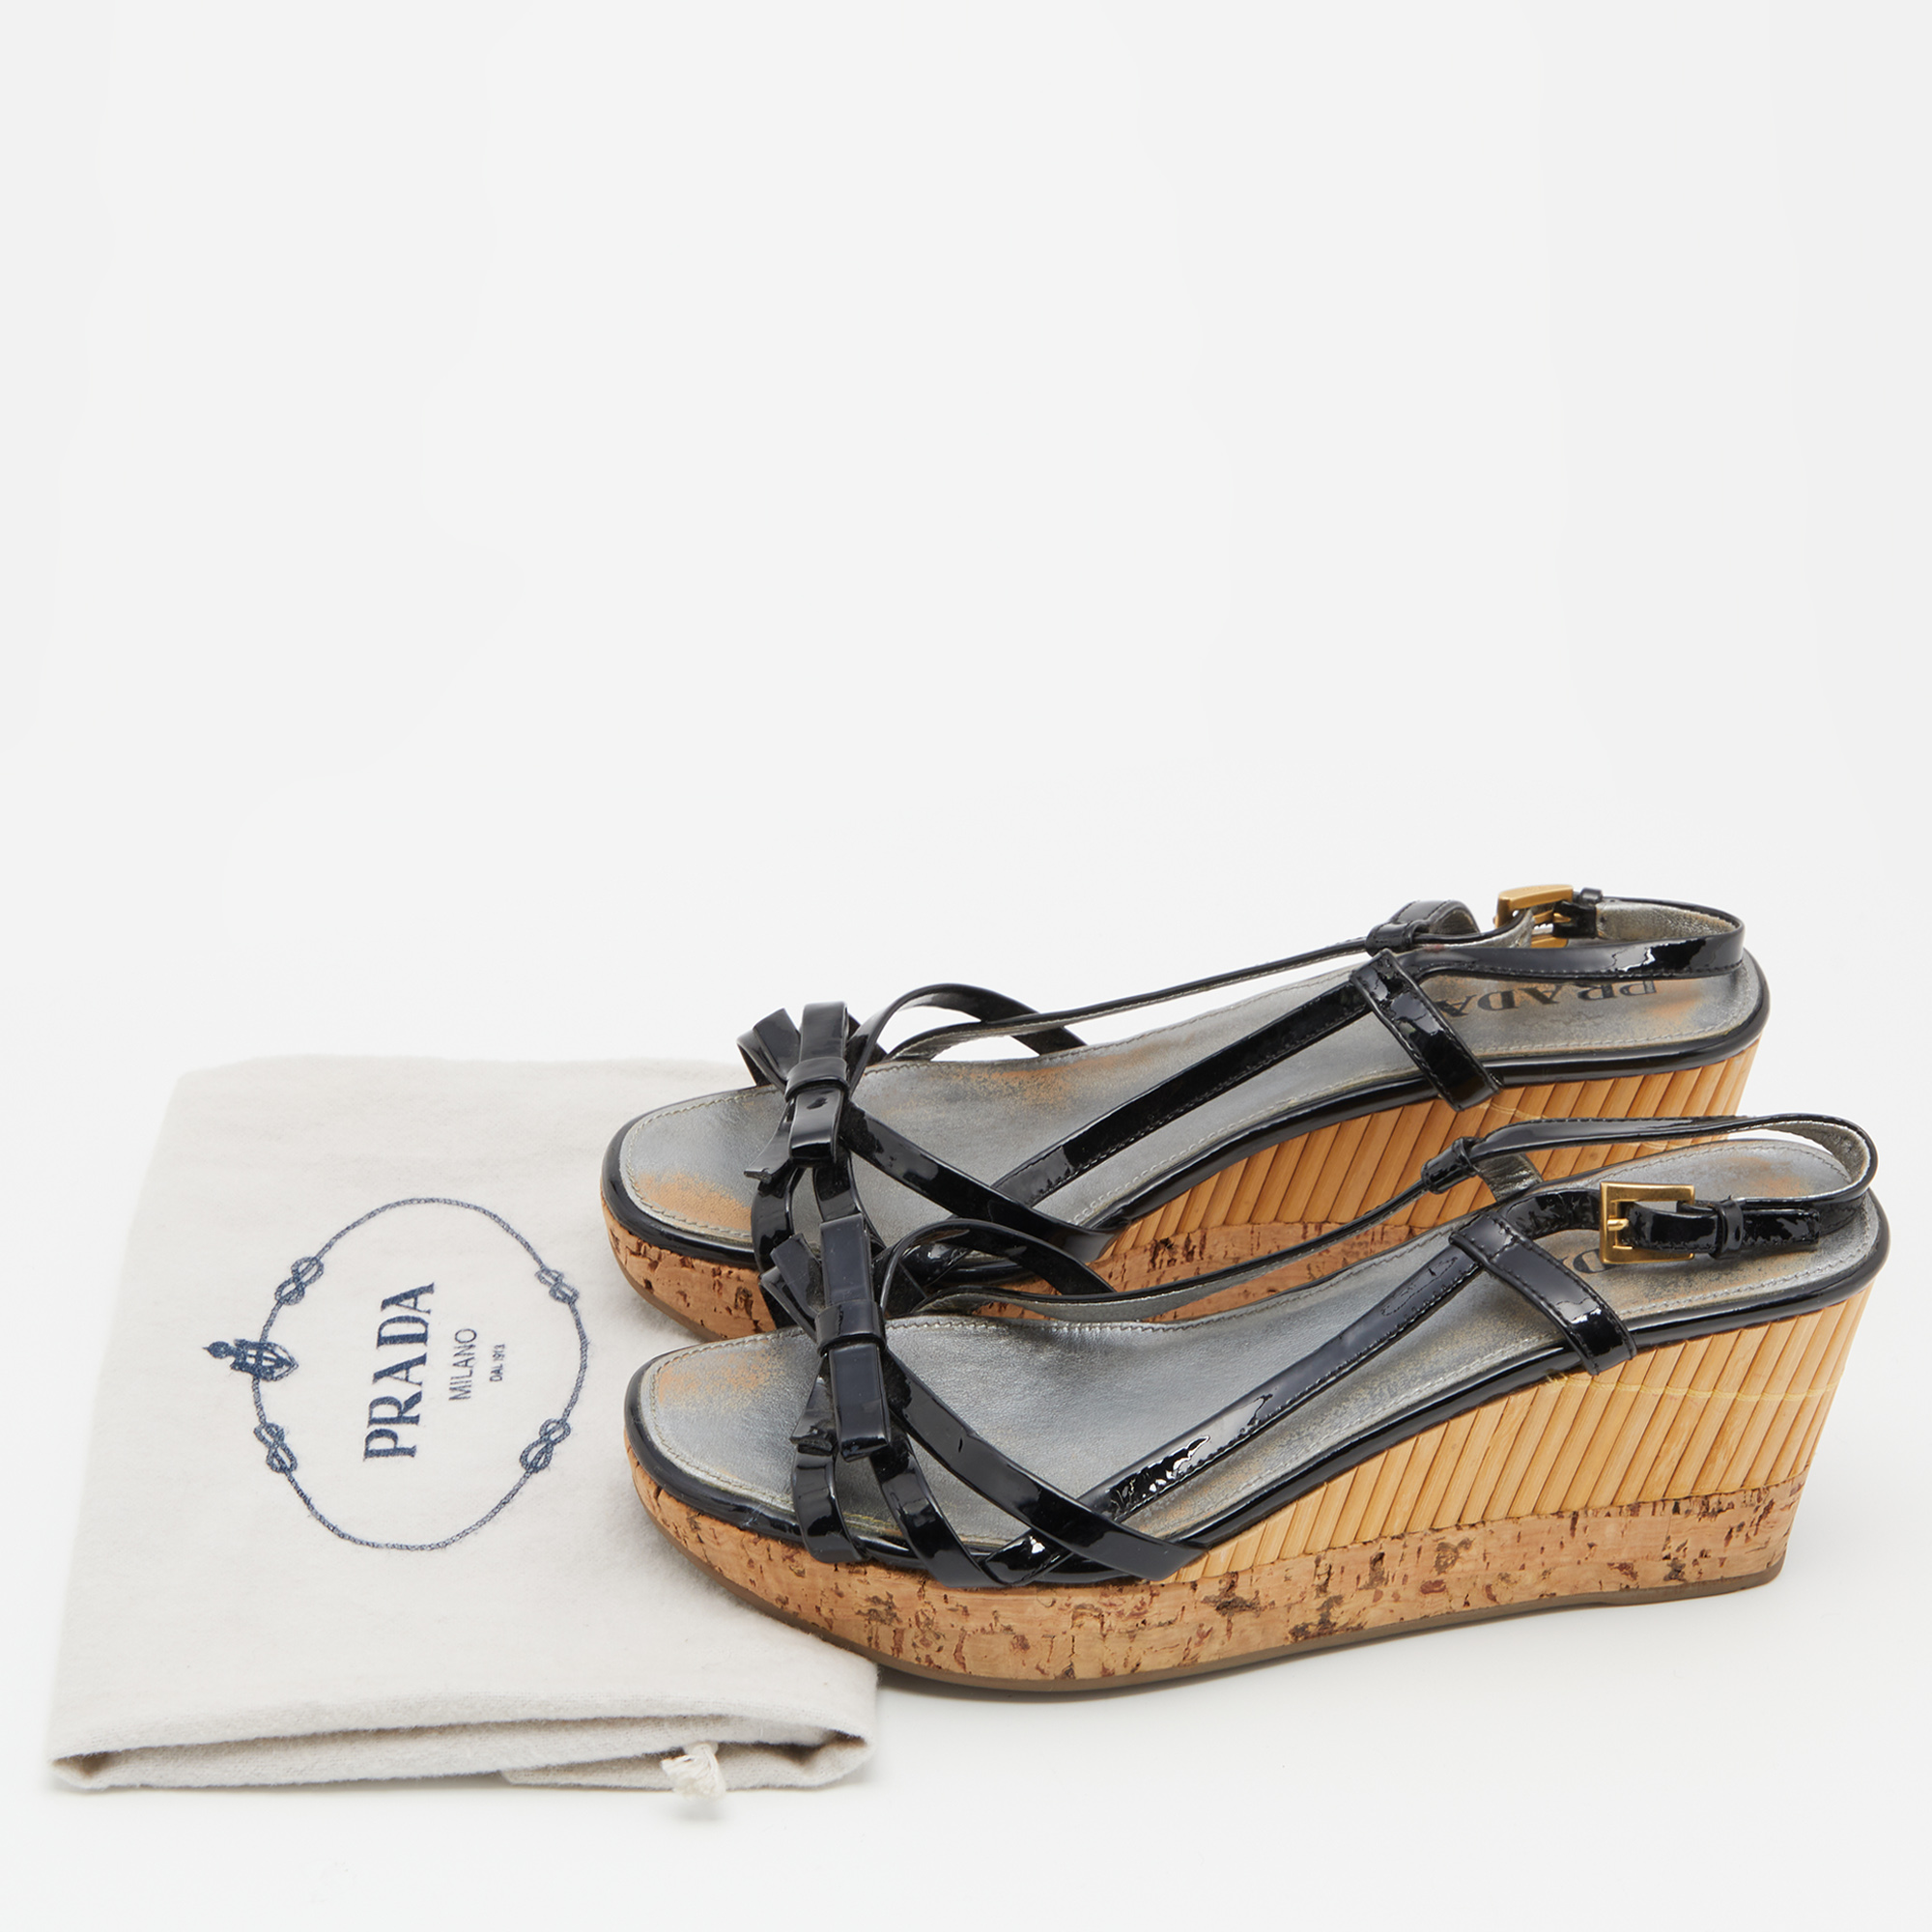 Prada Black Patent Leather Strappy Bow Platform Wedge Sandals Size 36